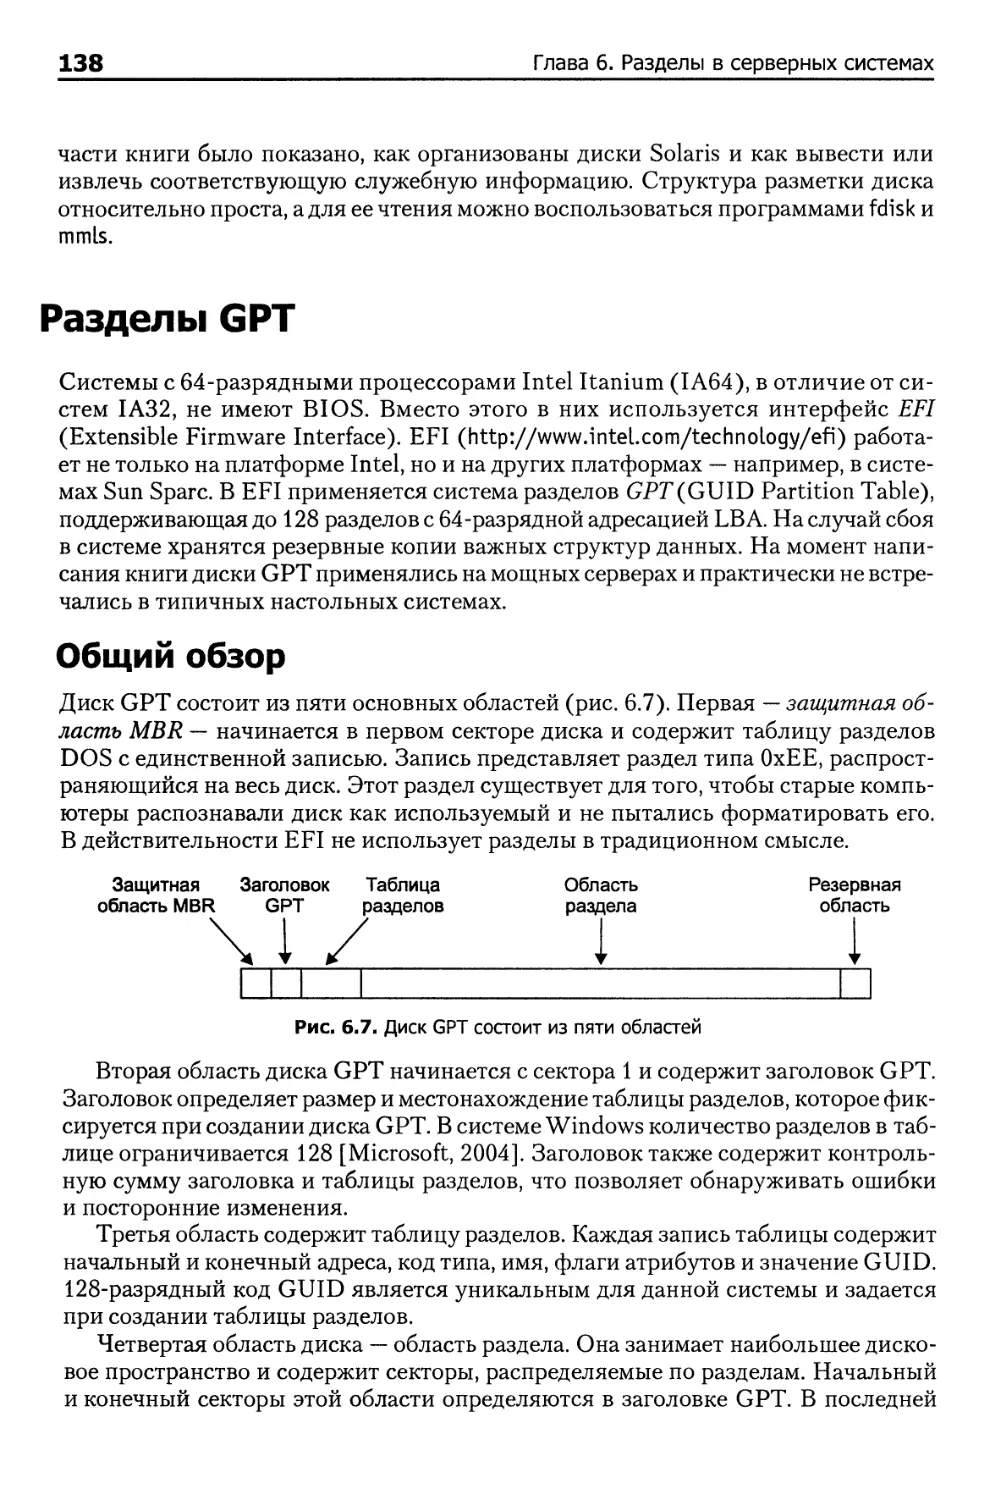 Разделы GPT